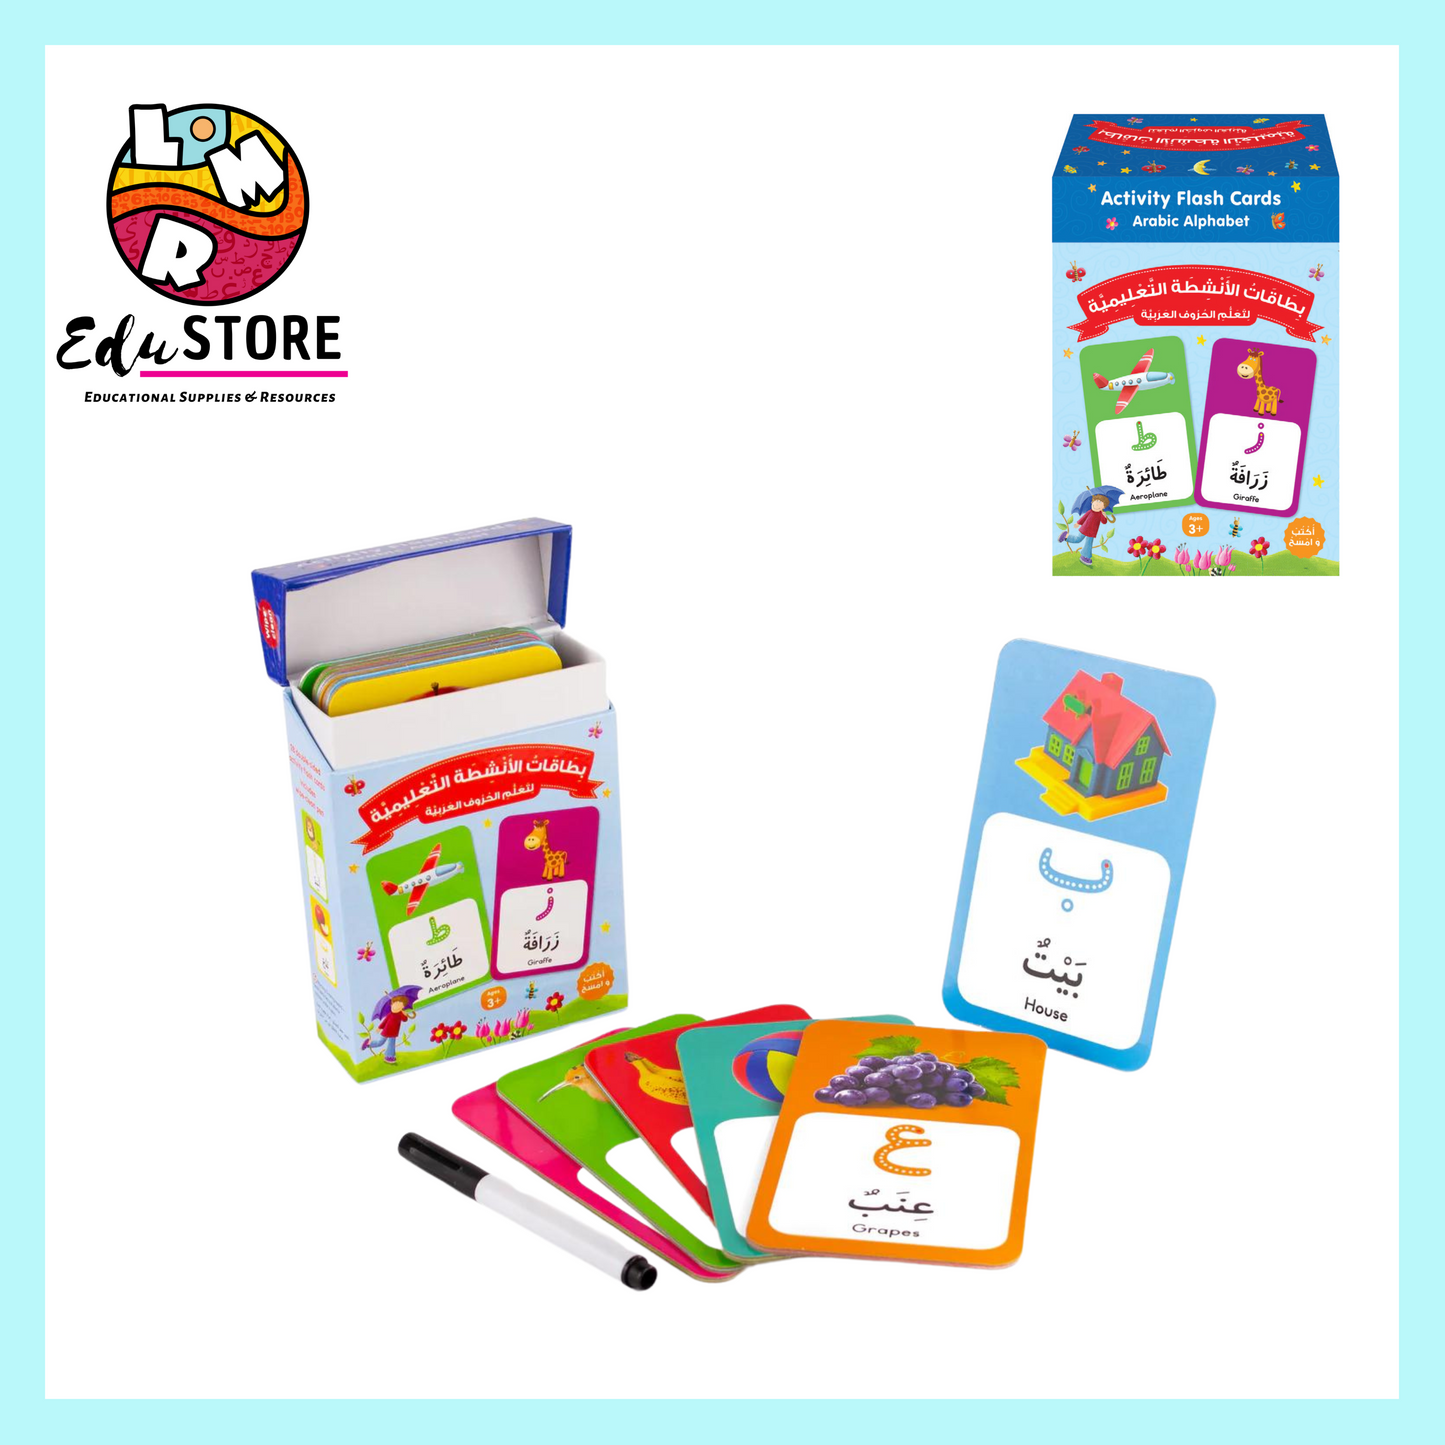 Arabic Alphabet Activity Flash Cards